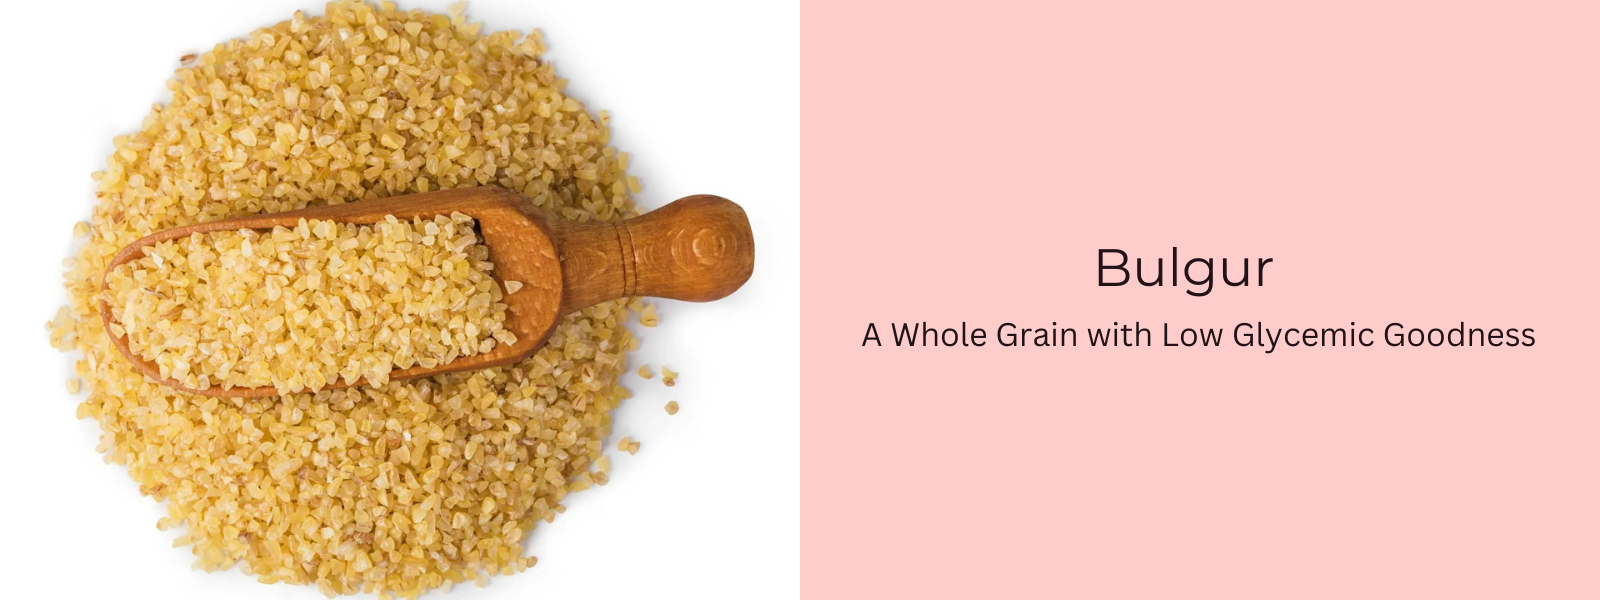 Bulgur: A Whole Grain with Low Glycemic Goodness